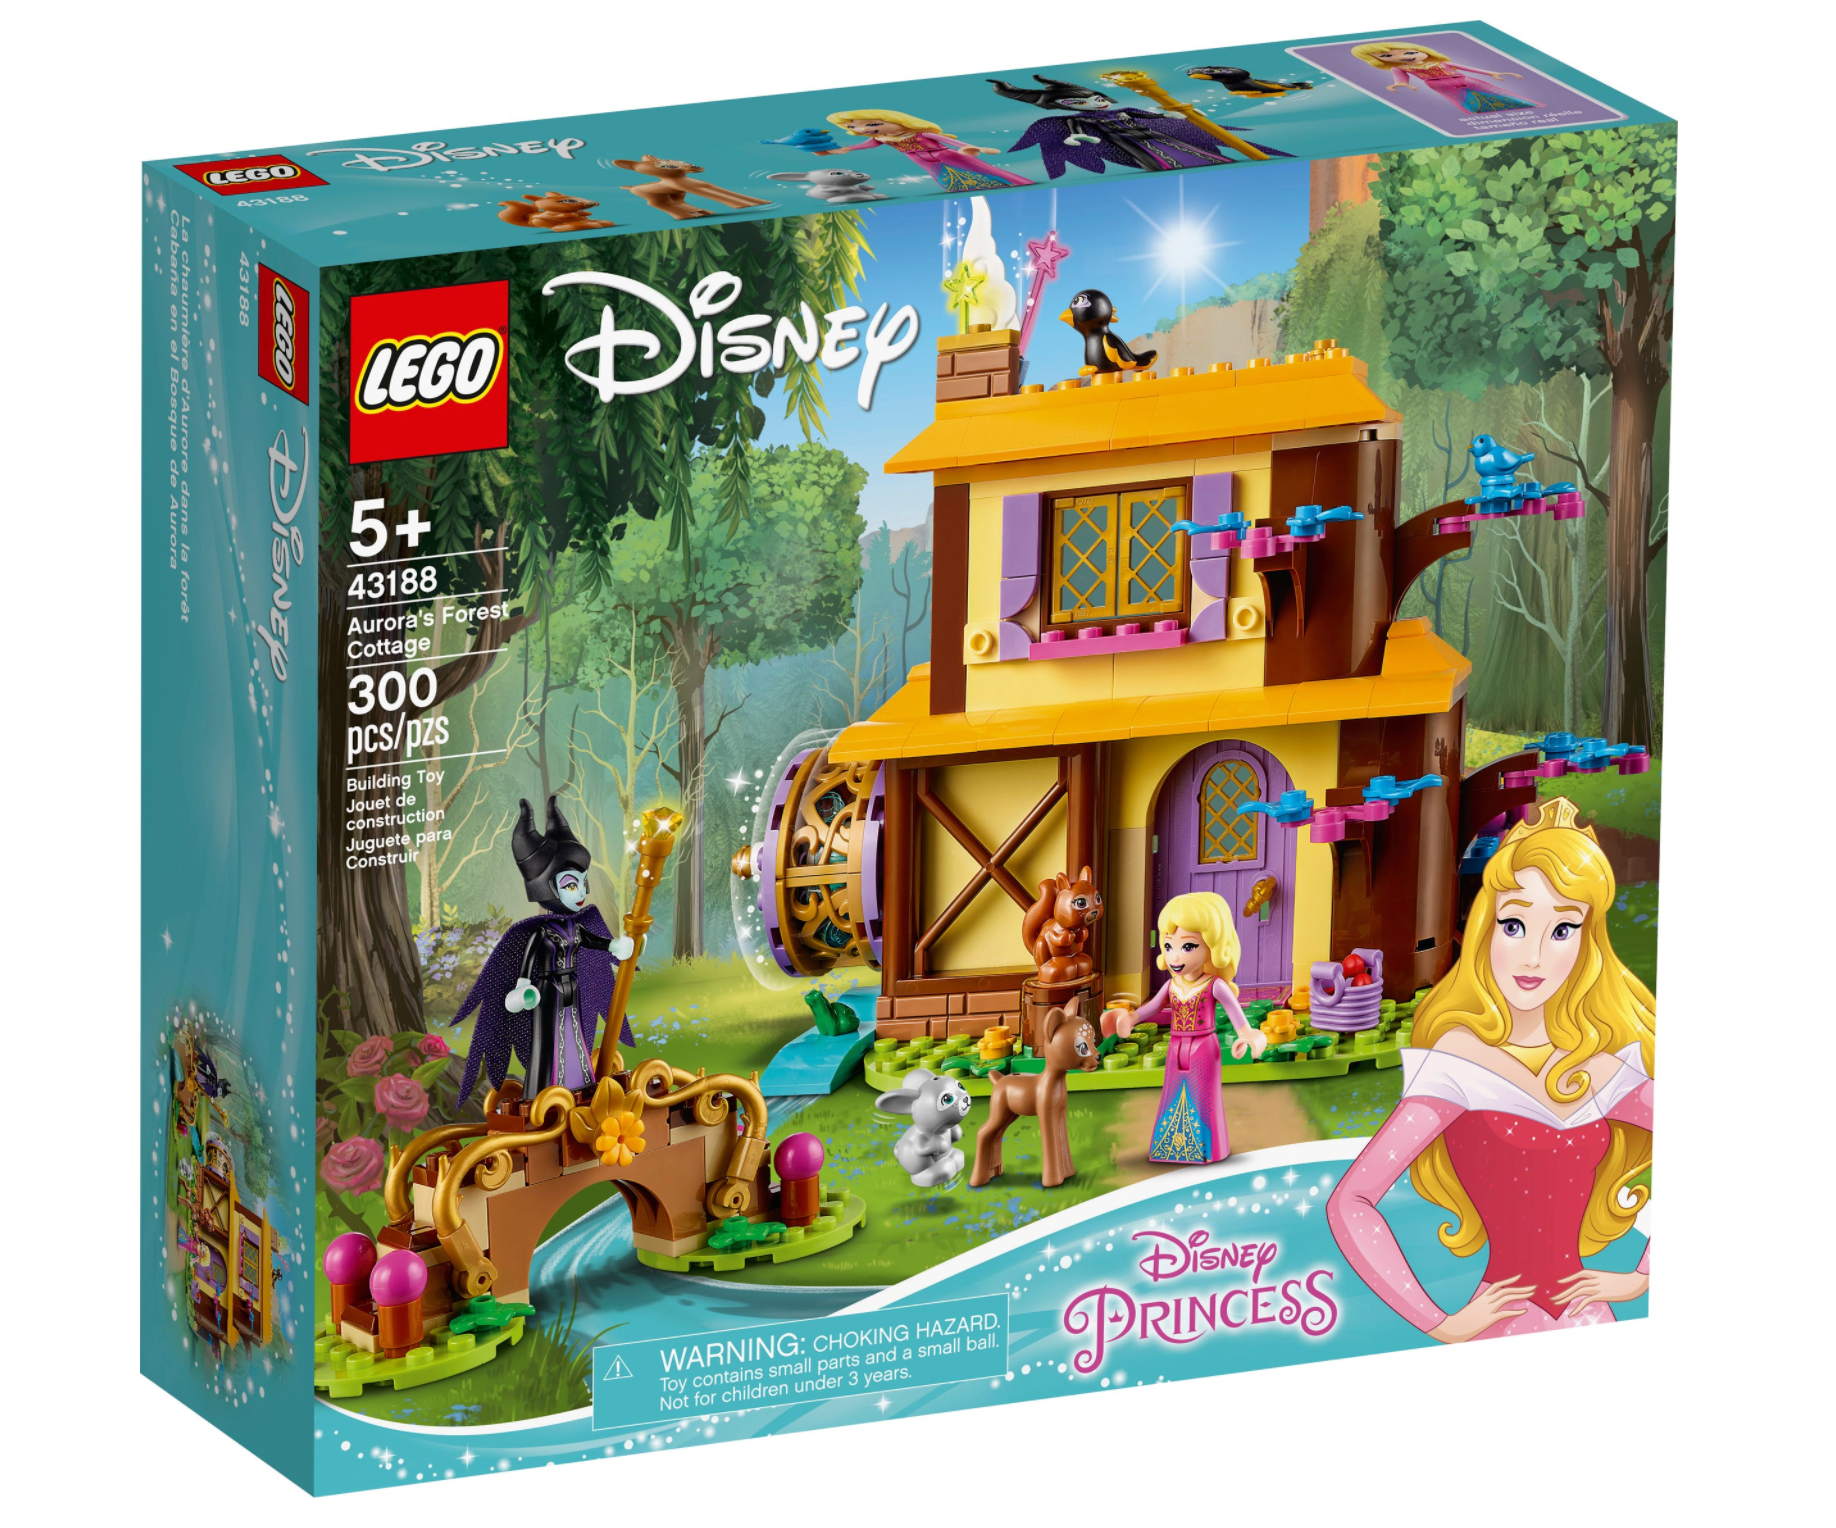 LEGO: Disney Princess - Aurora's Forest Cottage